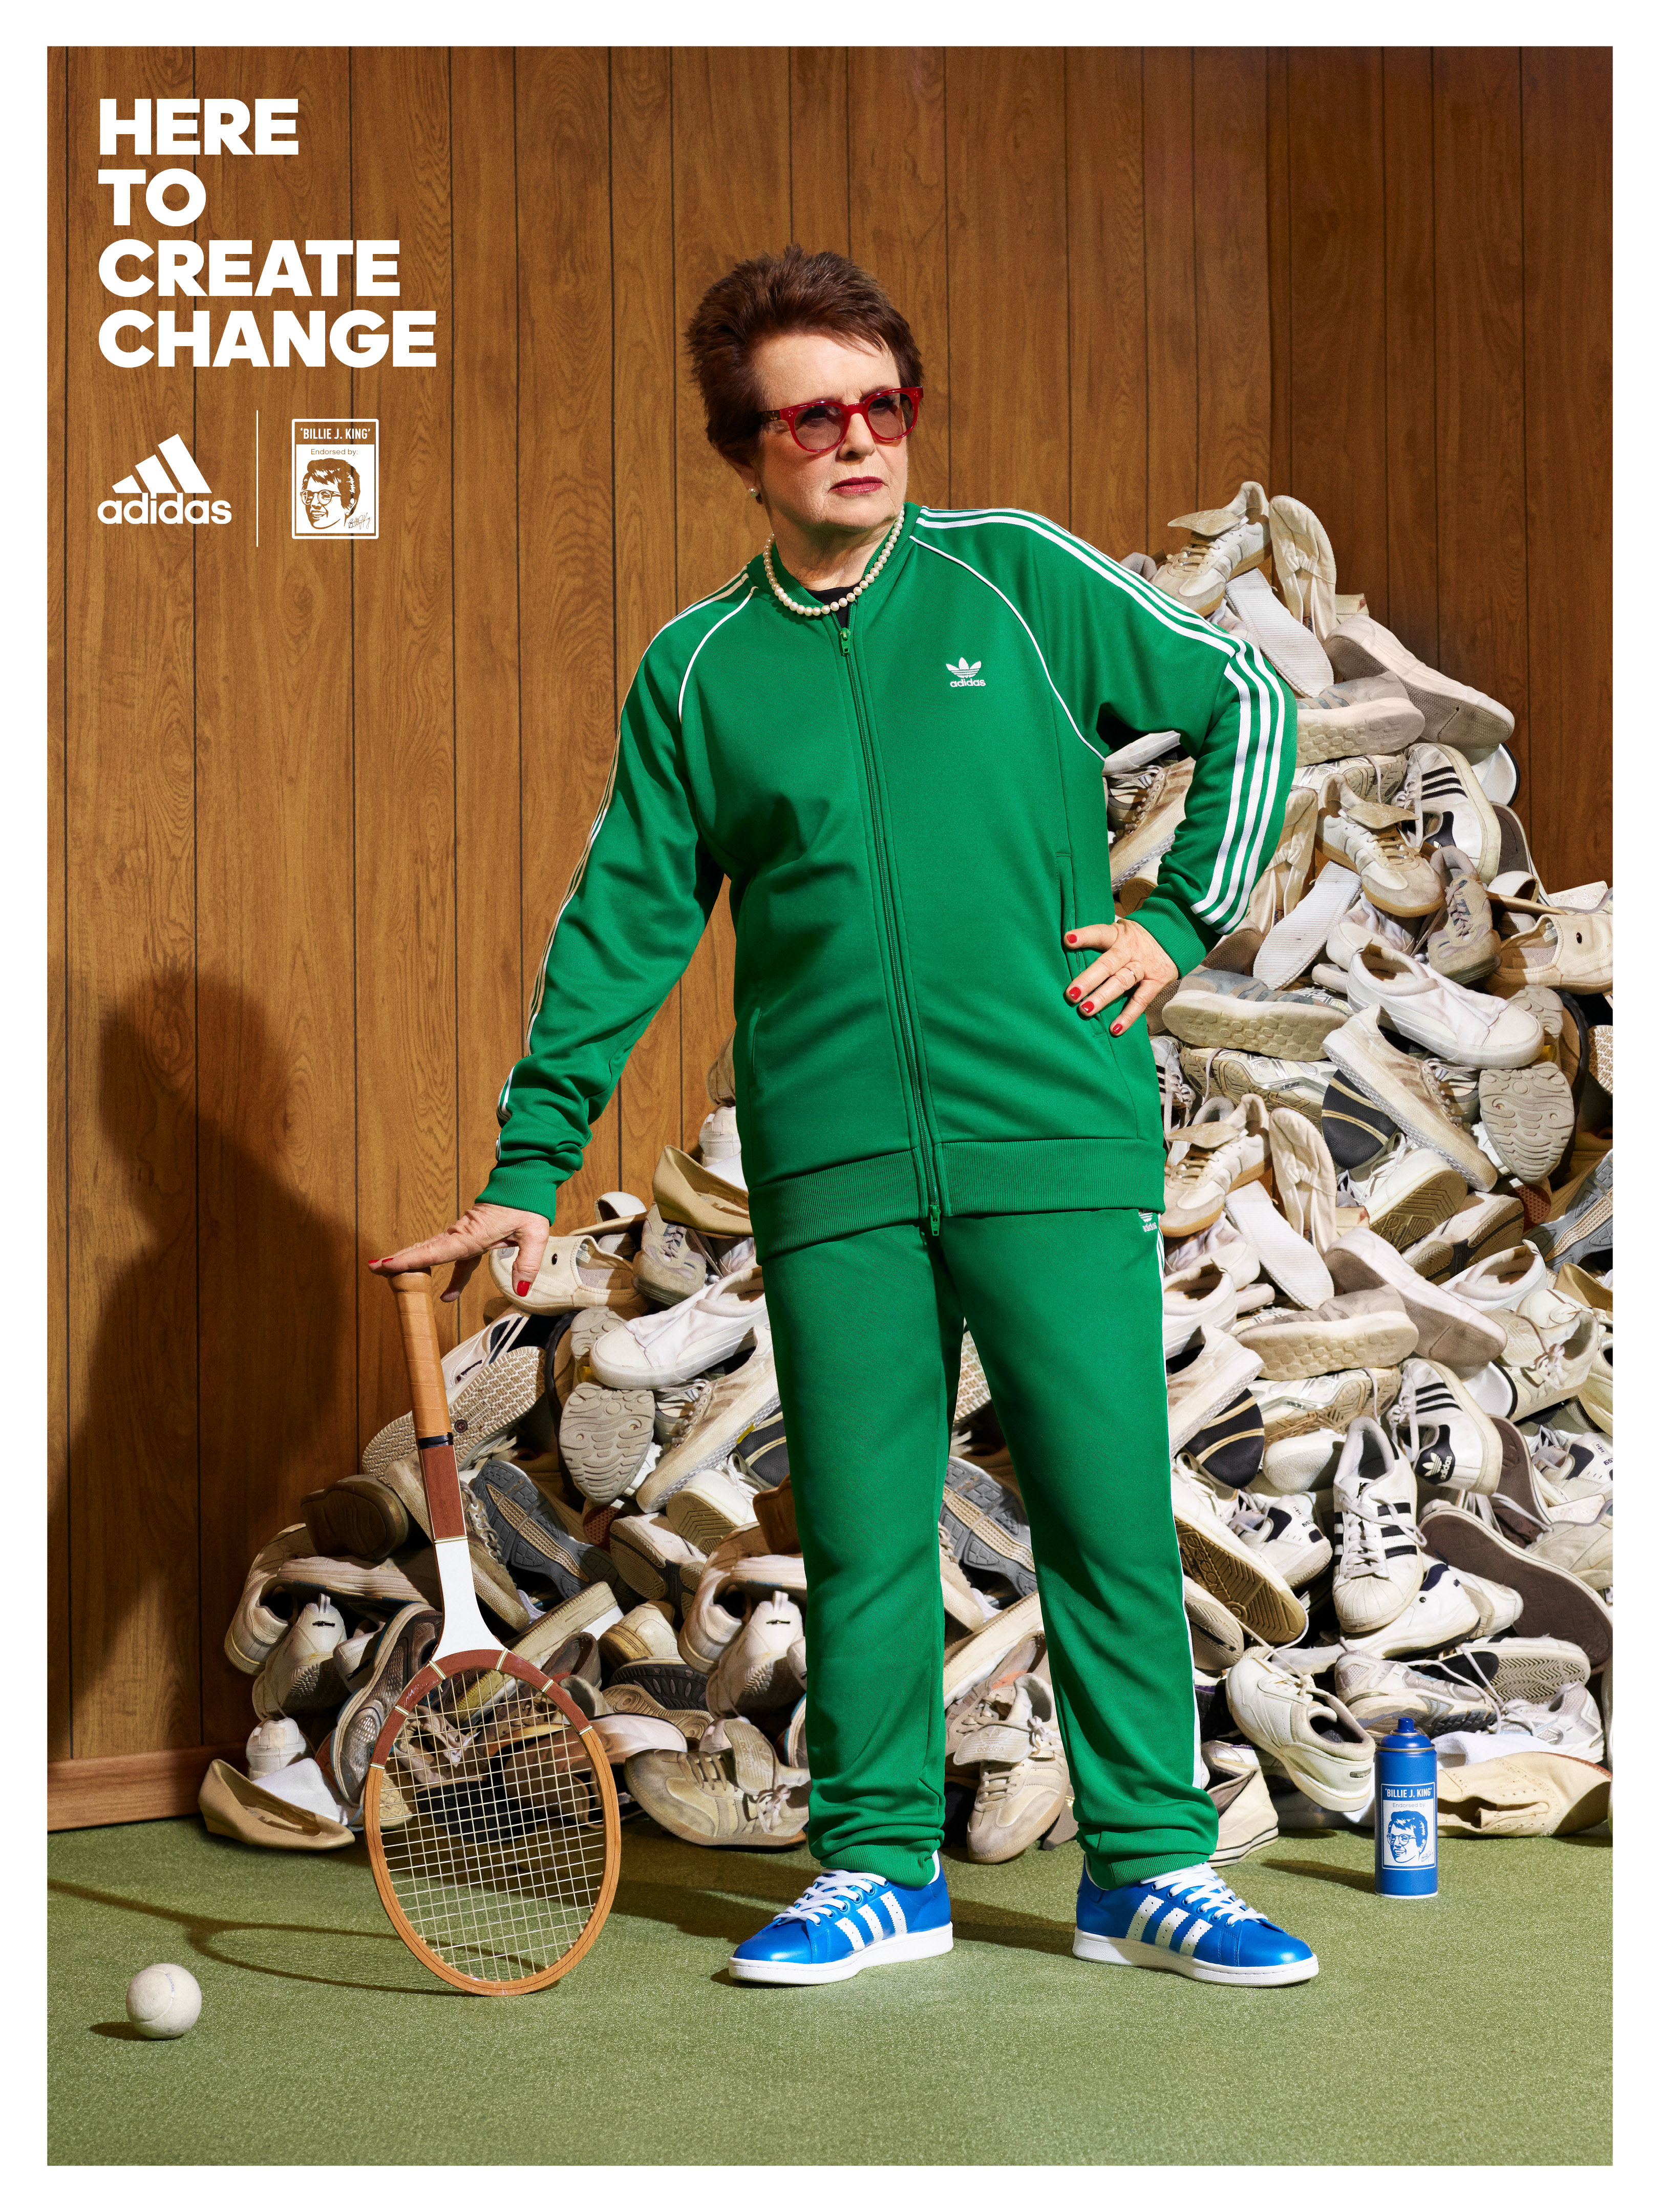 politicus Harmonie Terug, terug, terug deel Adidas | Here to Create Change | The One Club